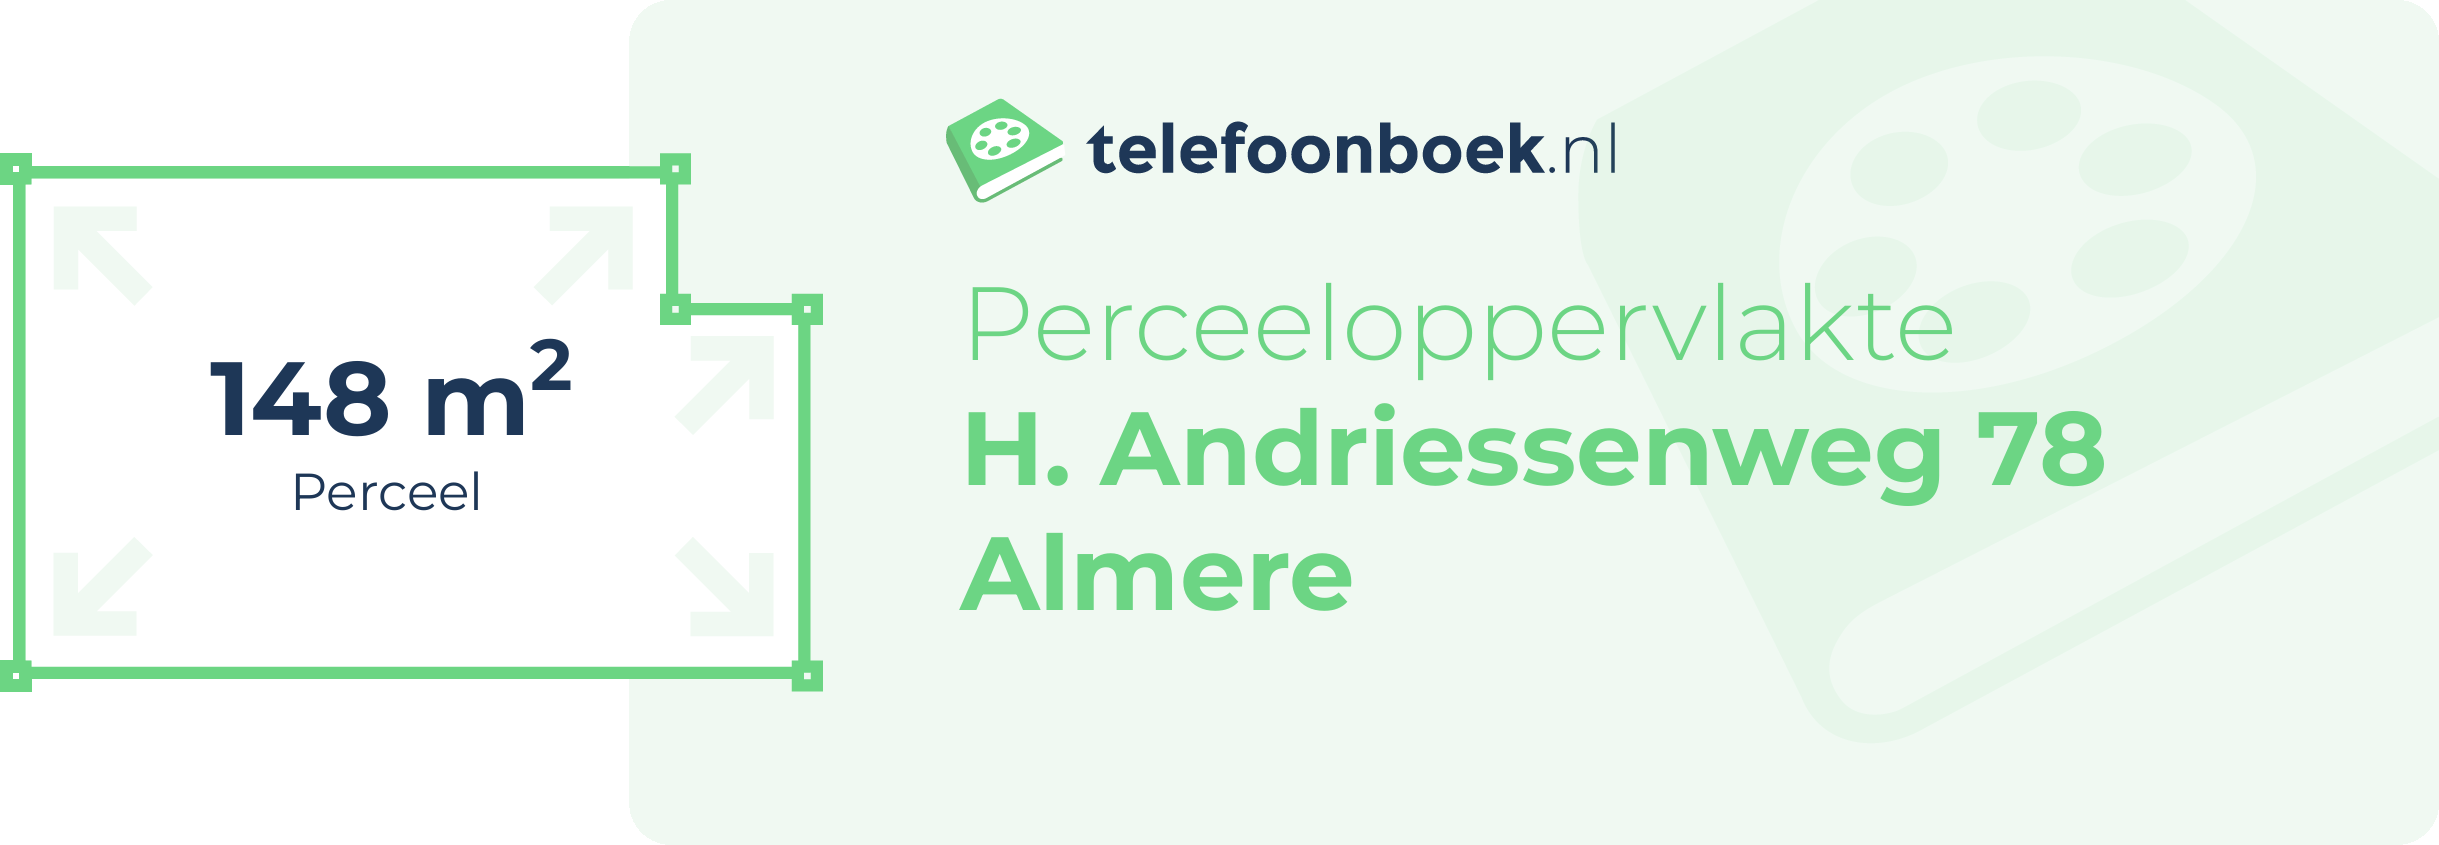 Perceeloppervlakte H. Andriessenweg 78 Almere